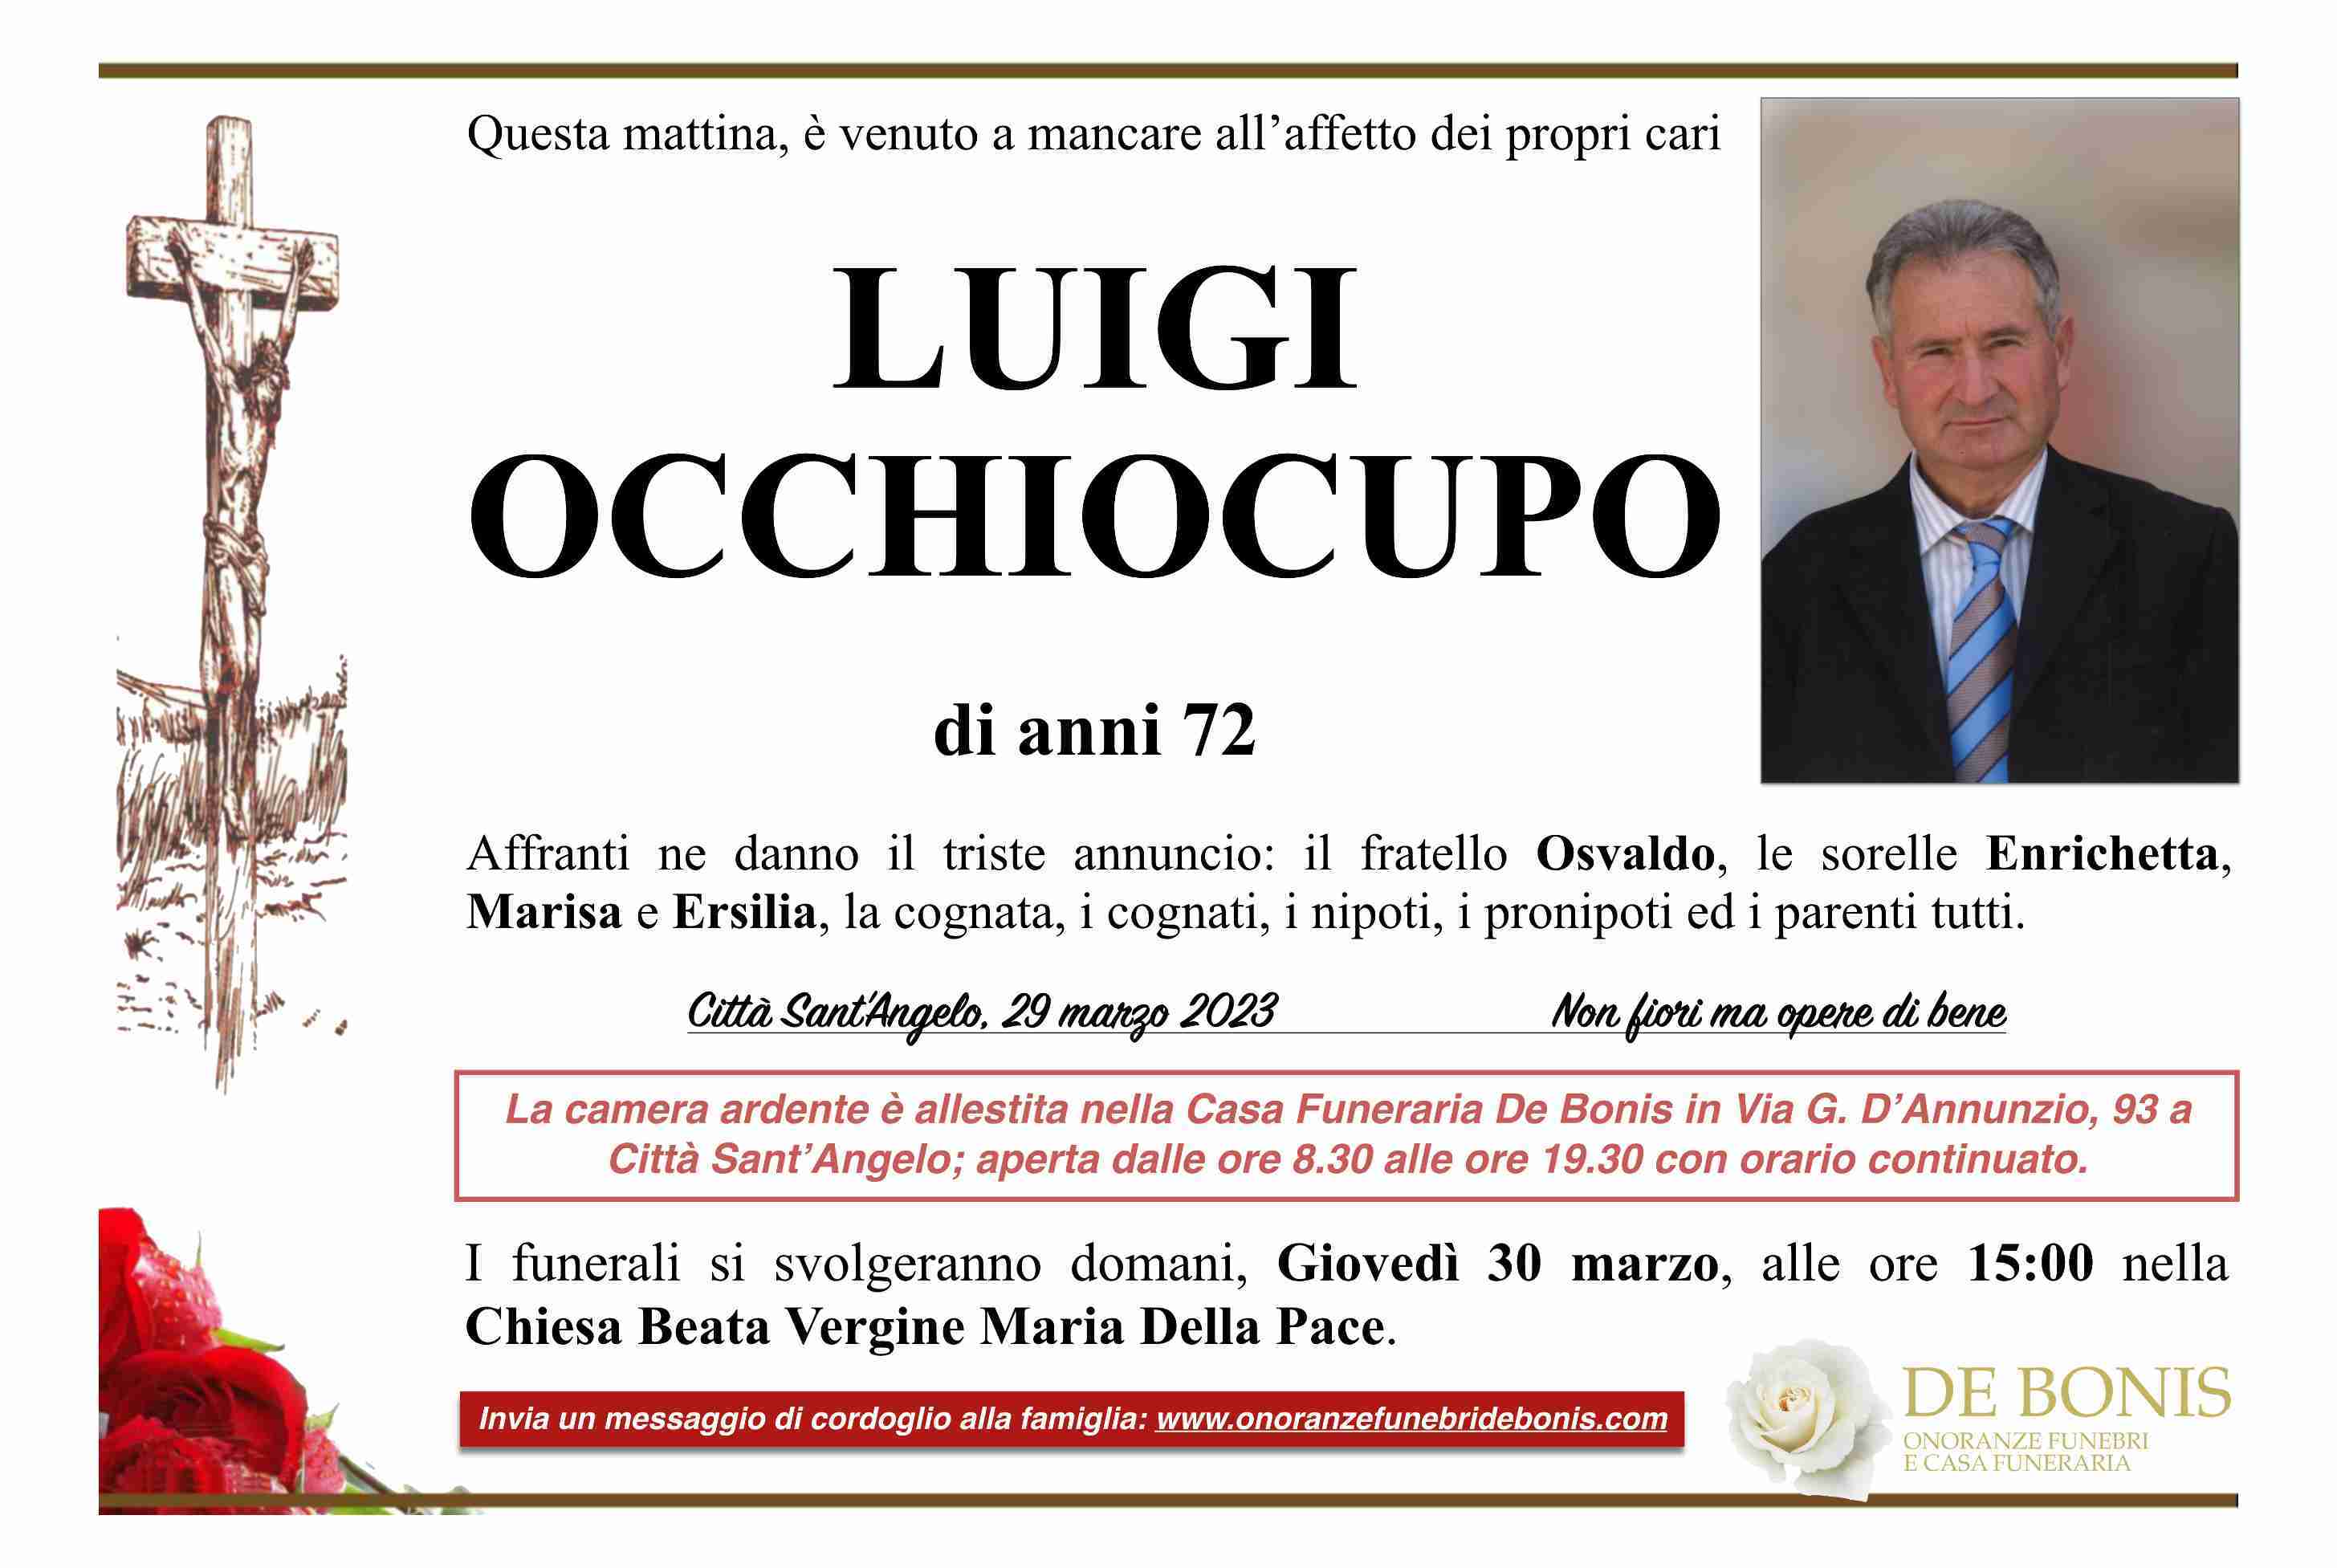 Luigi Occhiocupo